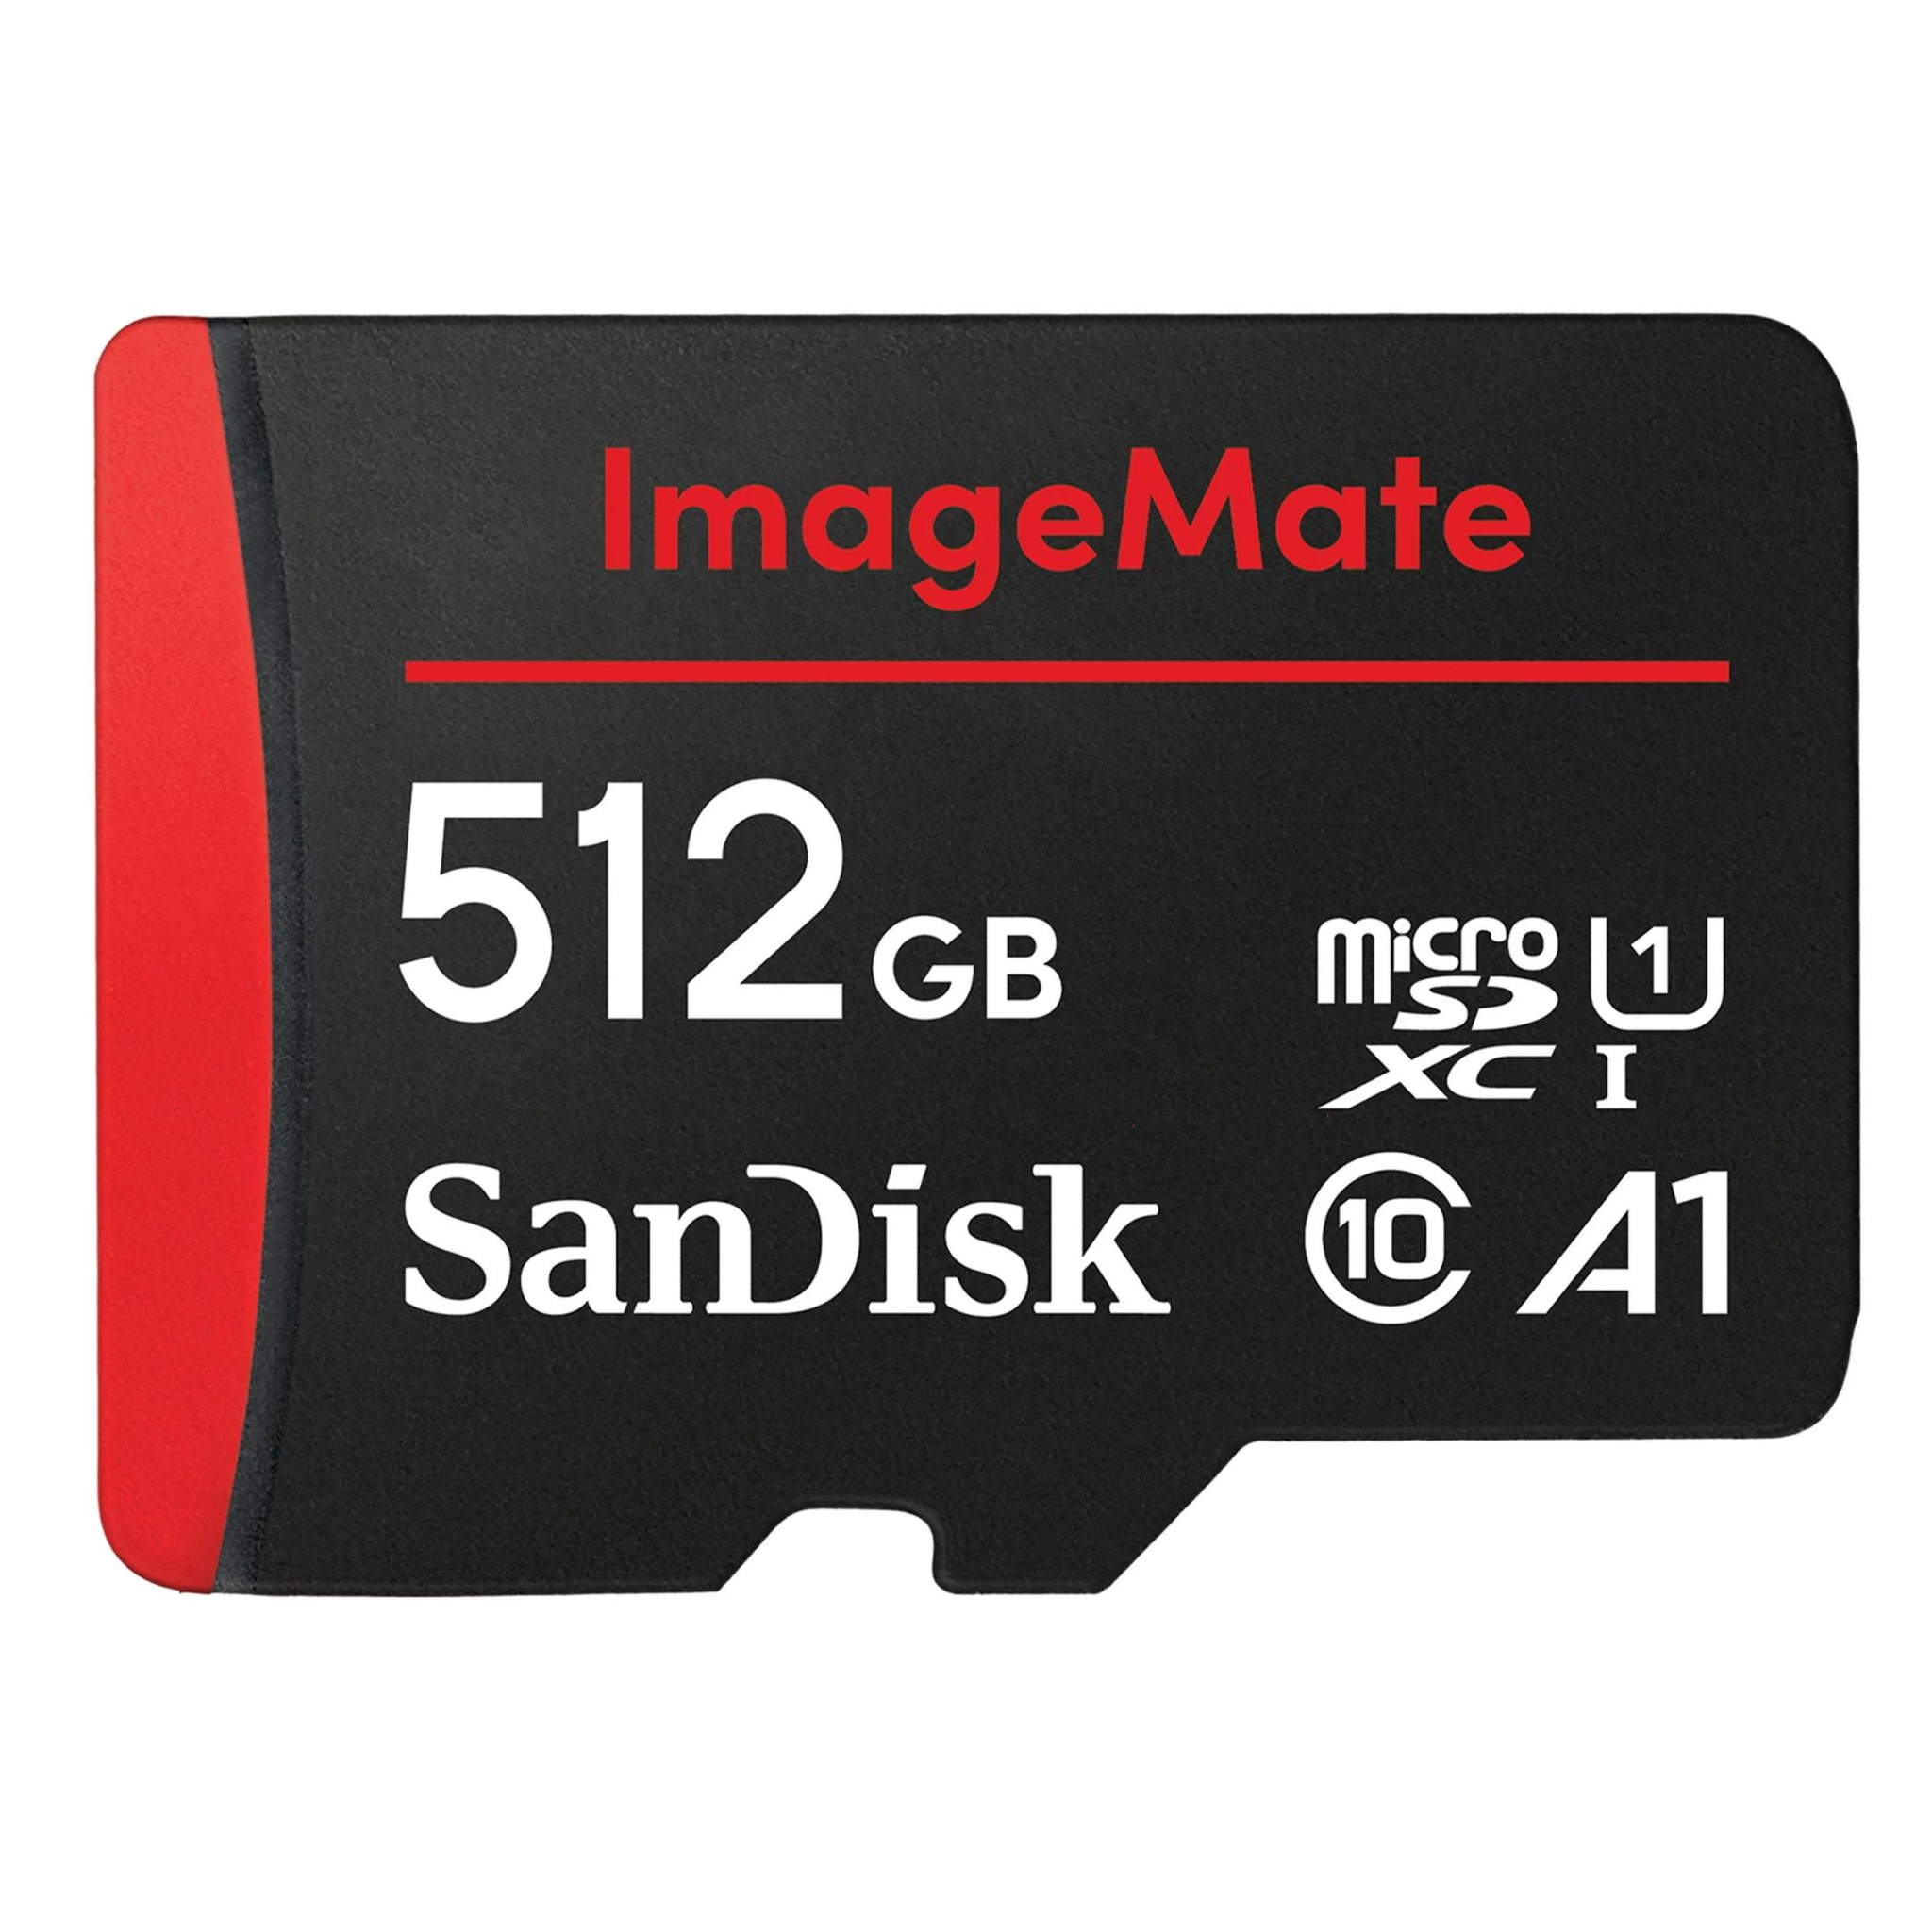 SanDisk 512GB ImageMate MicroSDXC Memory Card